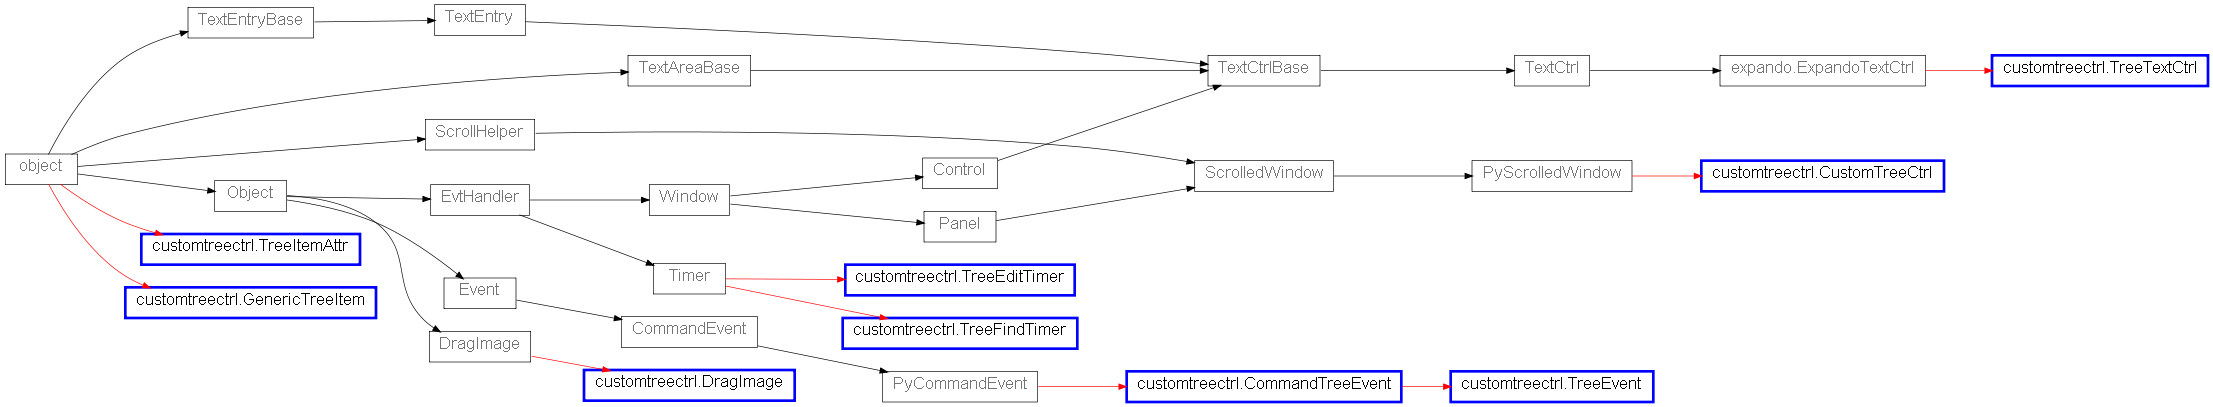 Inheritance diagram of customtreectrl